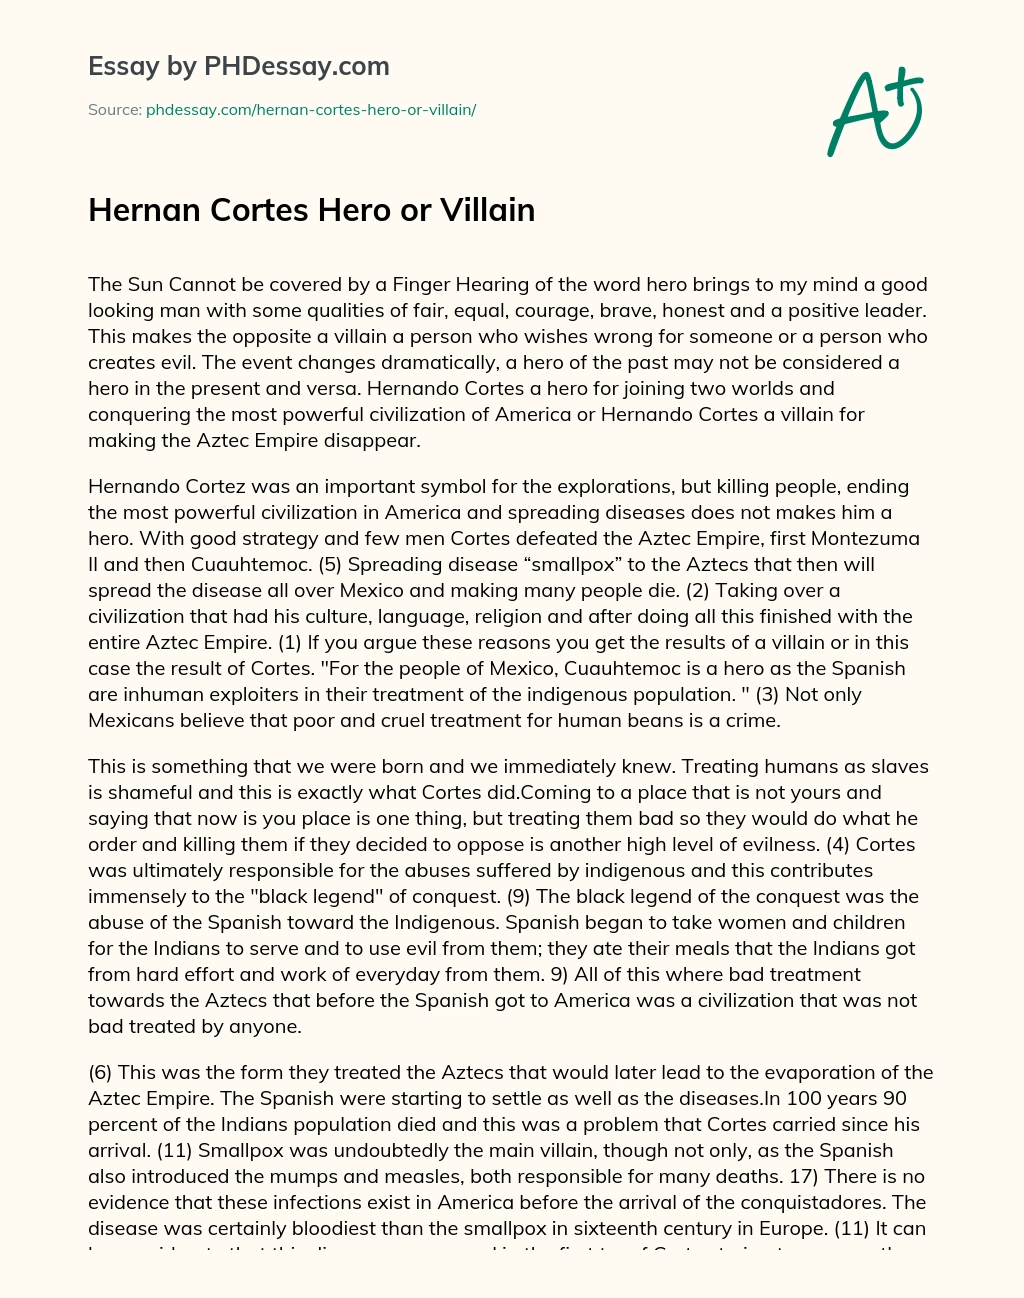 Hernan Cortes Hero or Villain essay